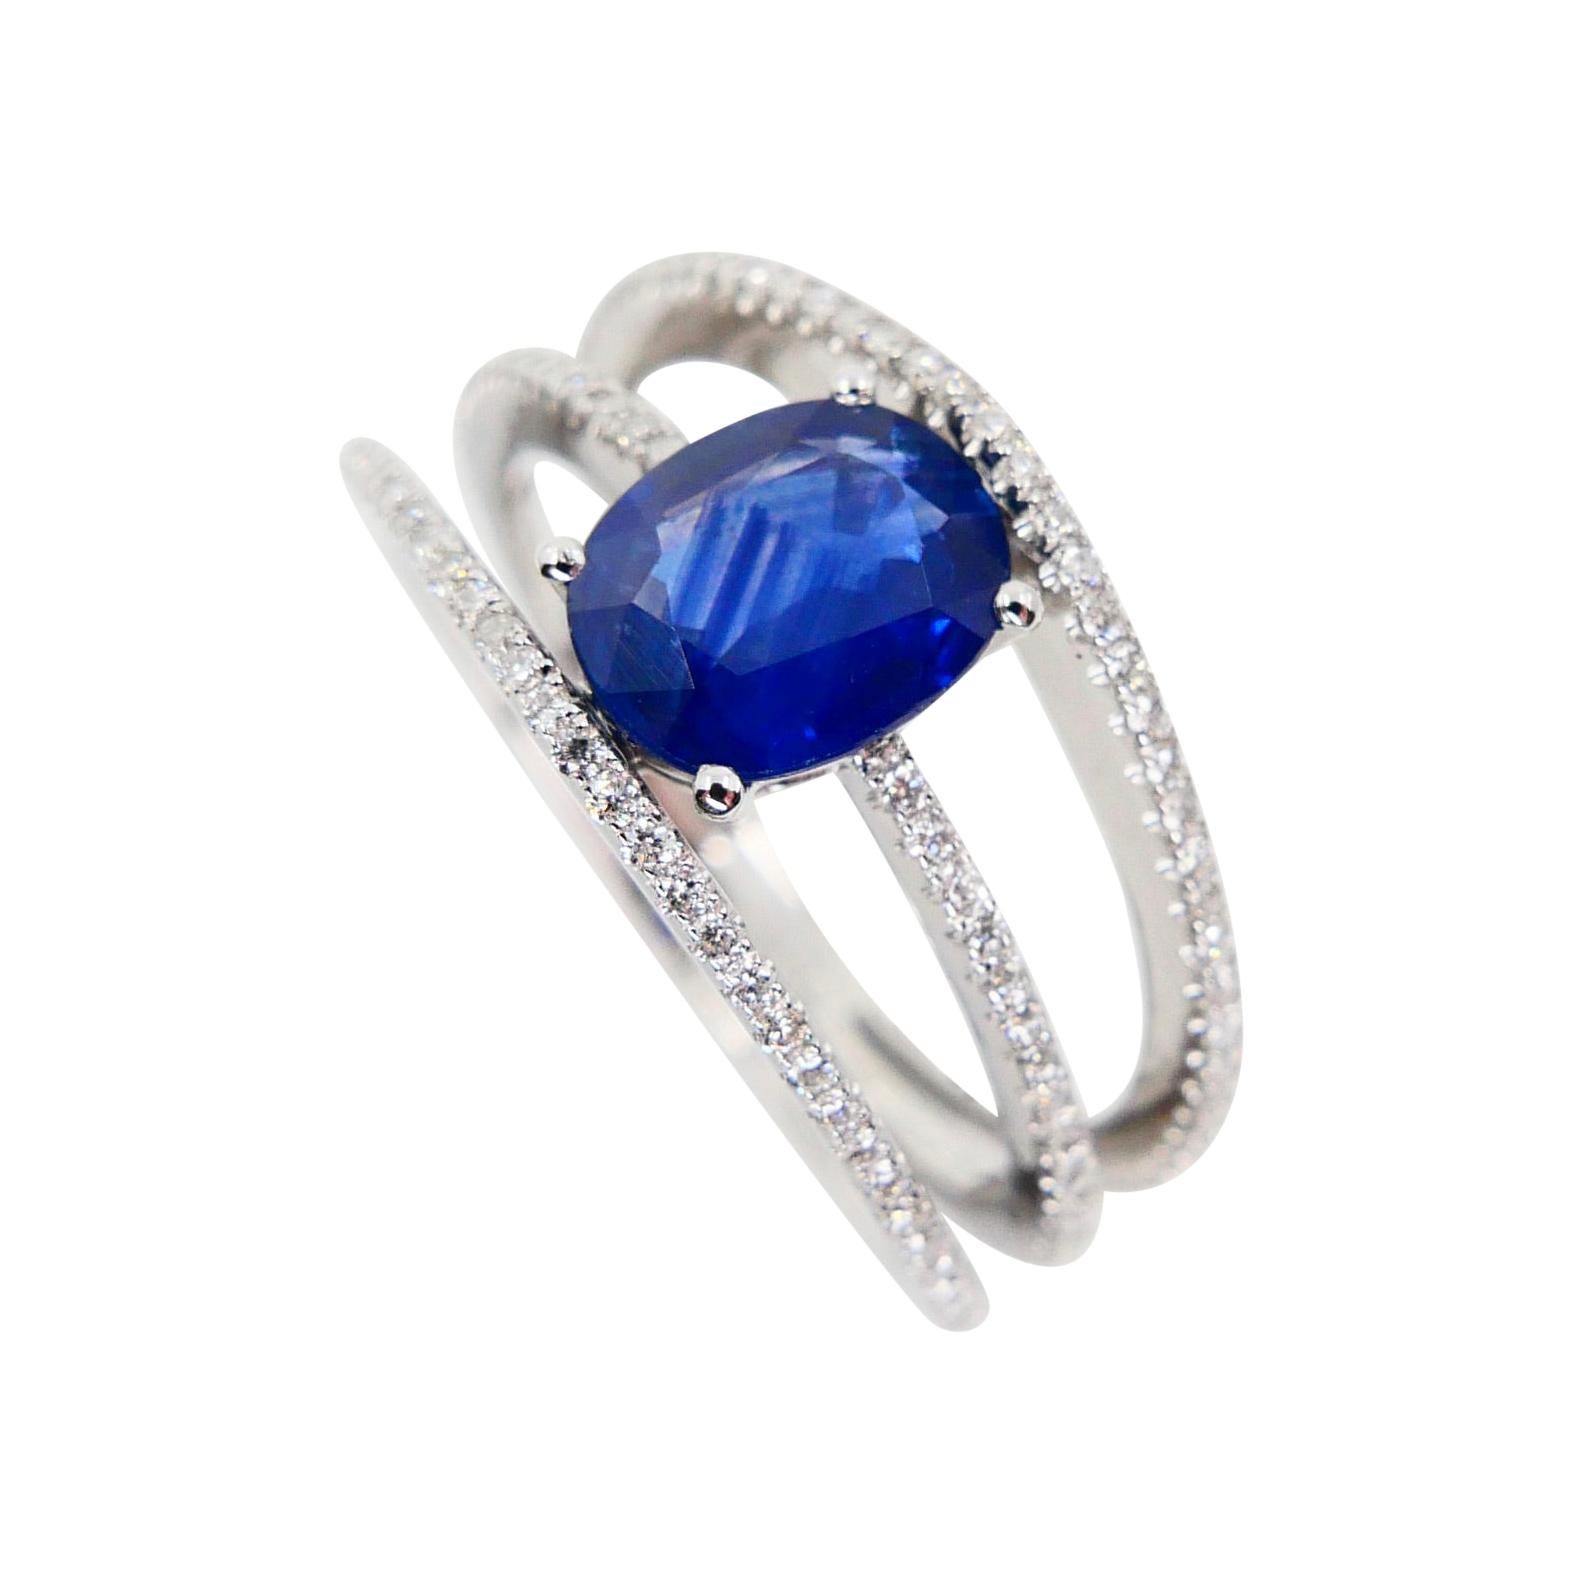 Blue Sapphire and Diamond Cocktail Ring, 3 Rows Design, 18 Karat White Gold